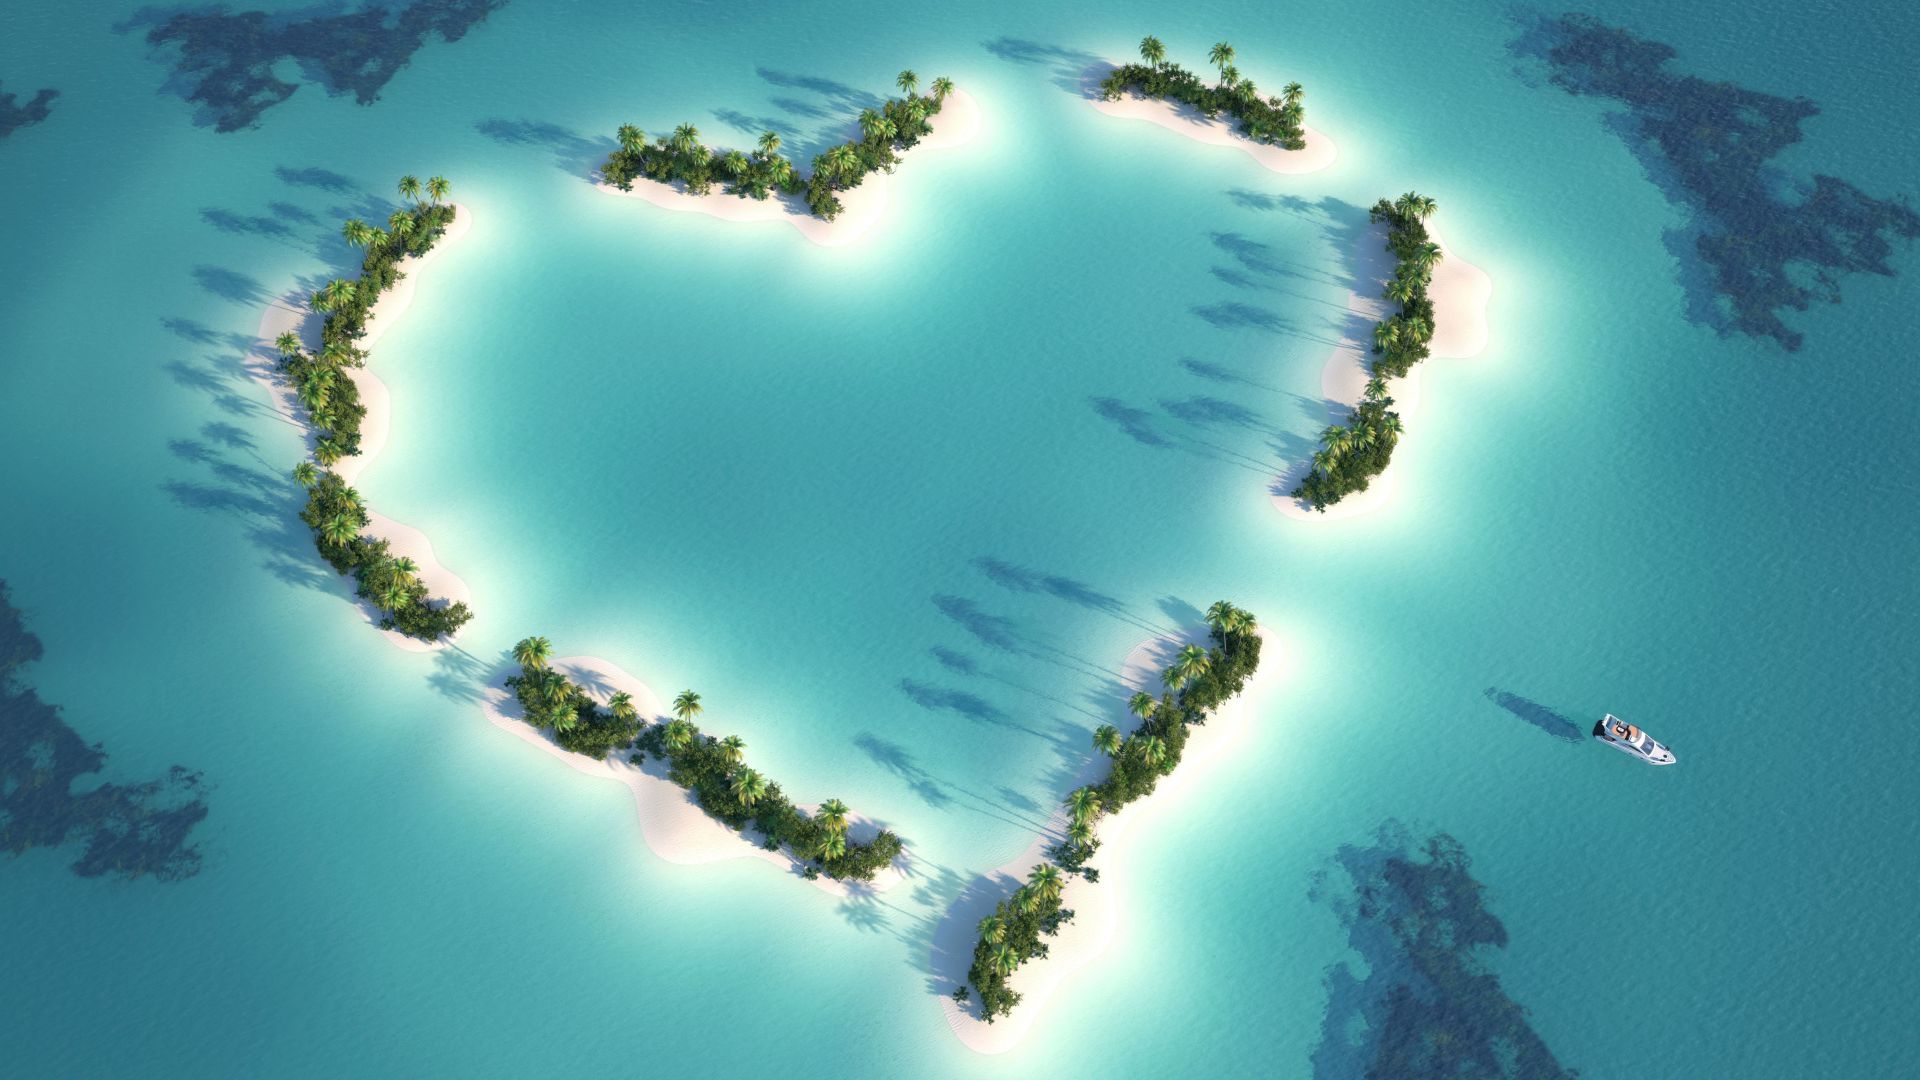 Maldives, 5k, 4k wallpaper, Indian Ocean, Best Beaches in the World, island, palms, love (horizontal)